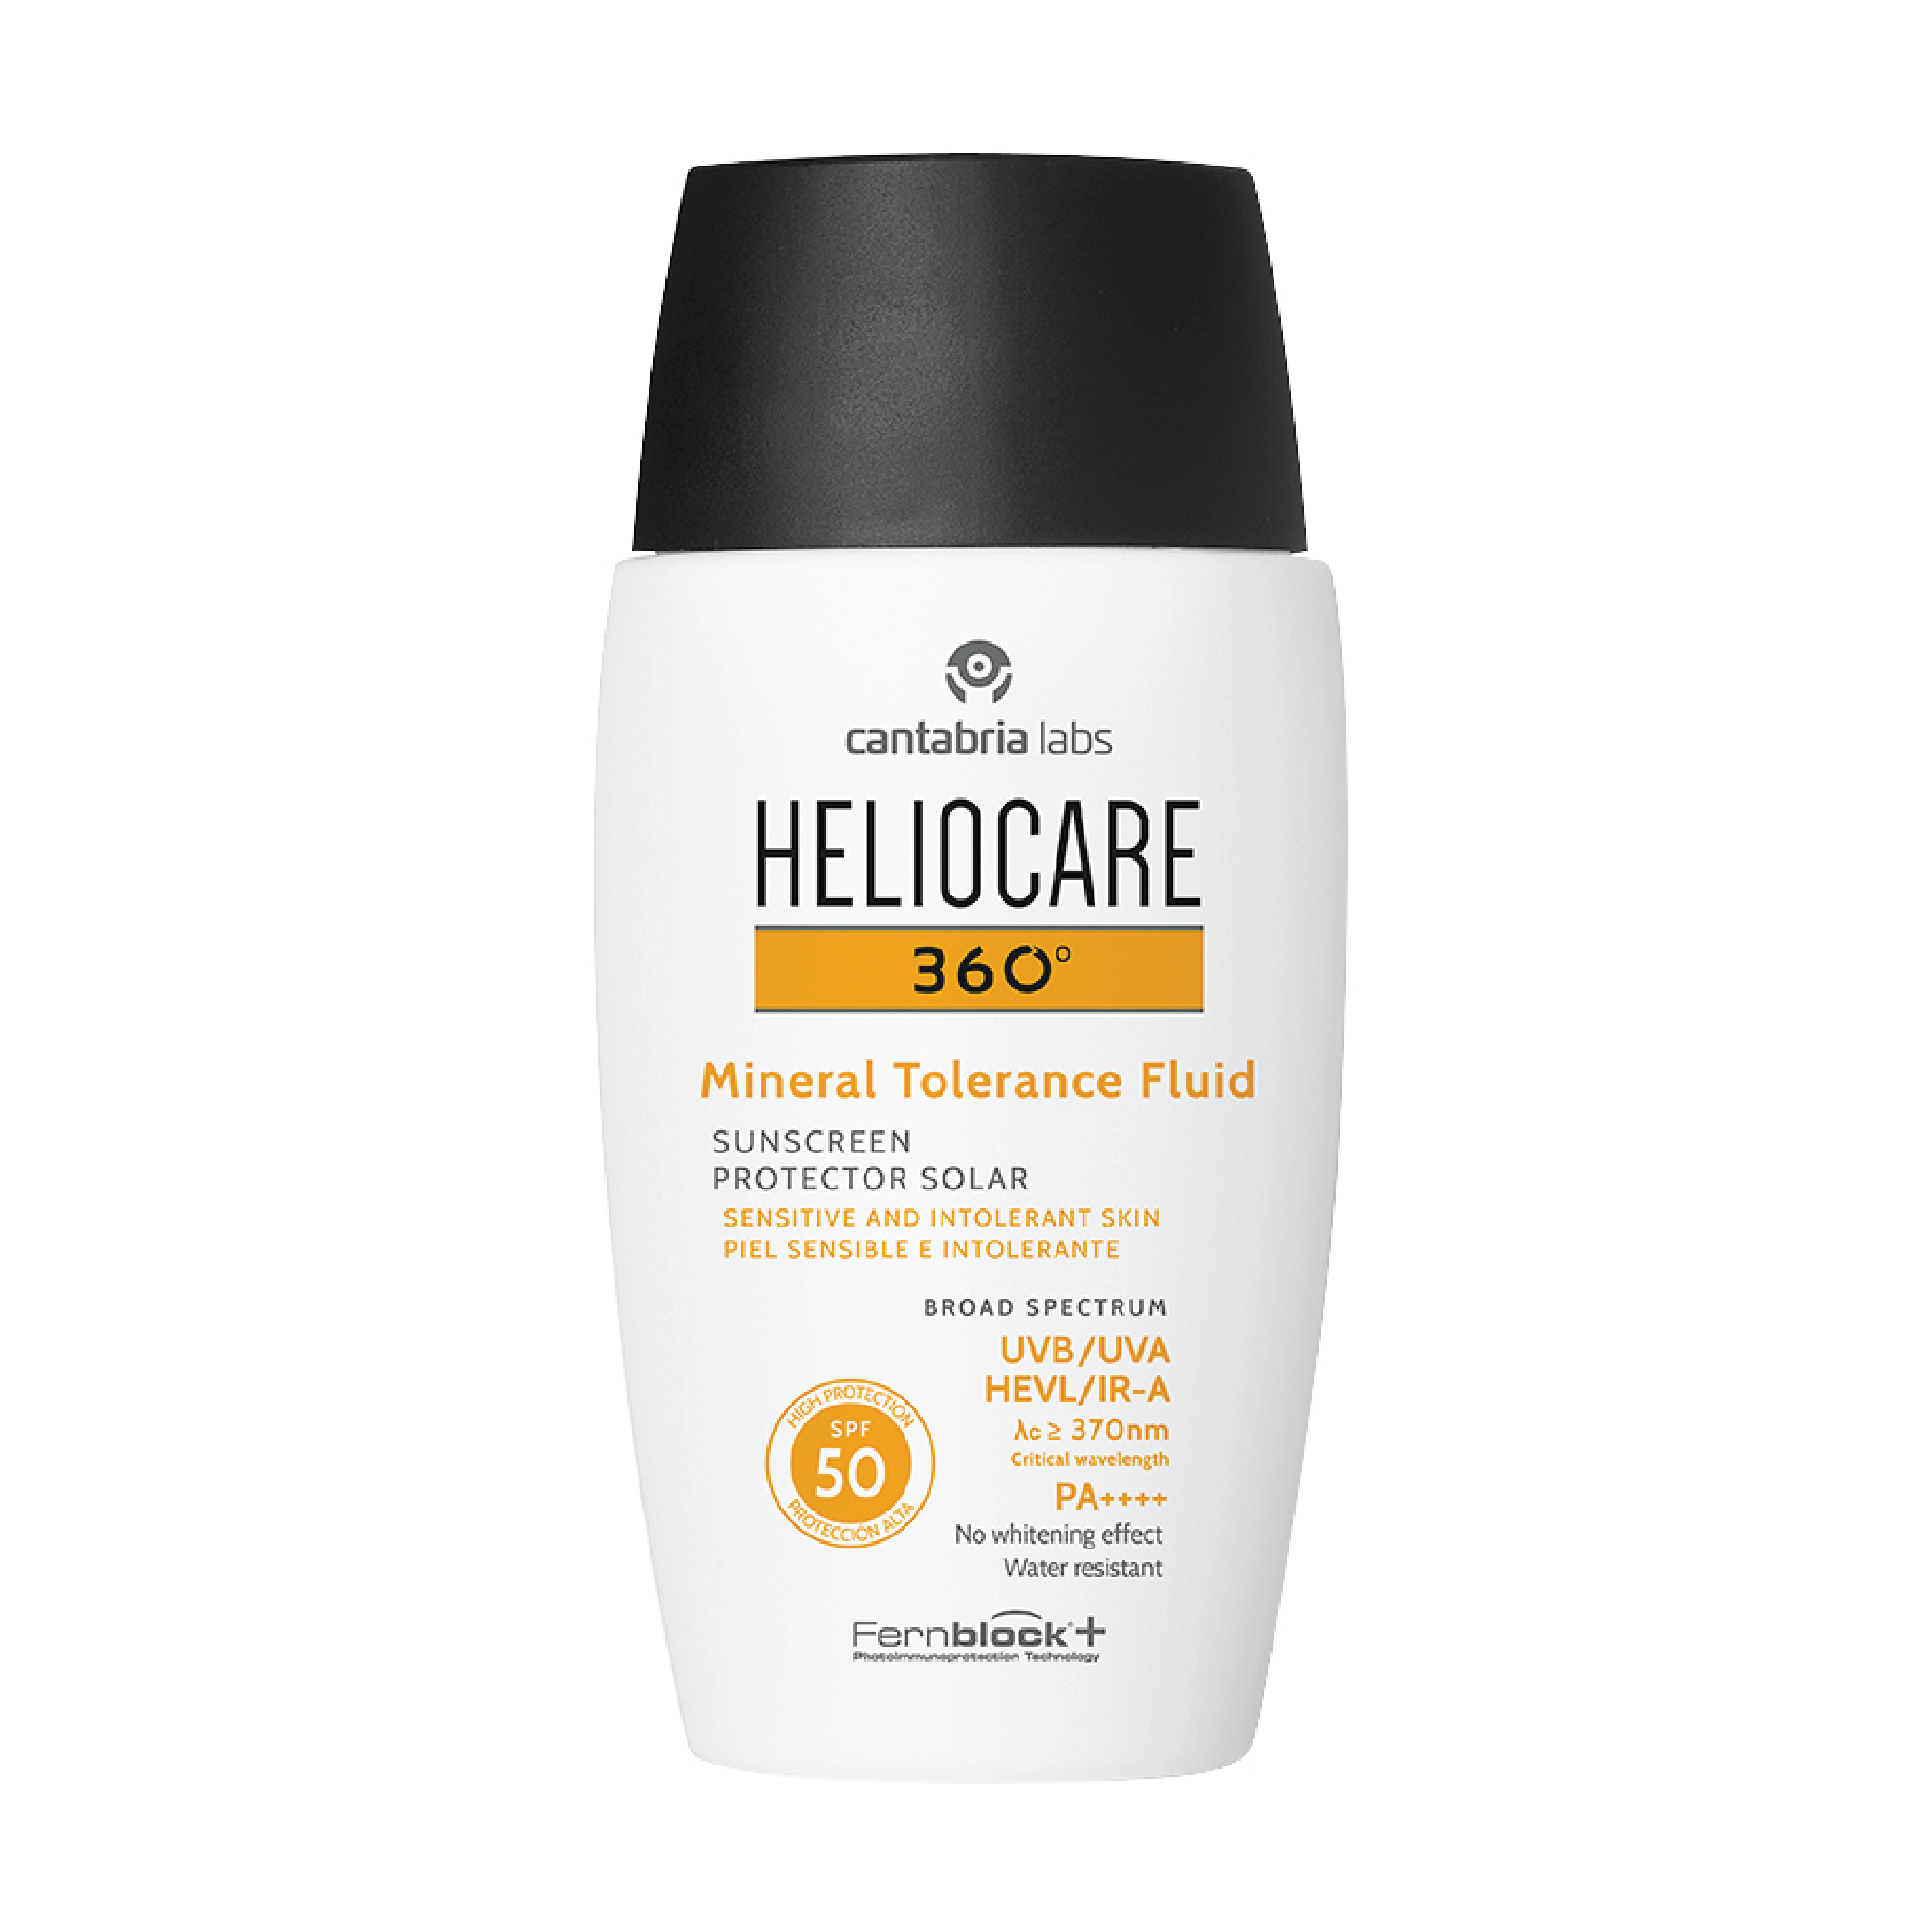 Heliocare 360° Mineral Tolerance Fluid SPF50, 50 ml